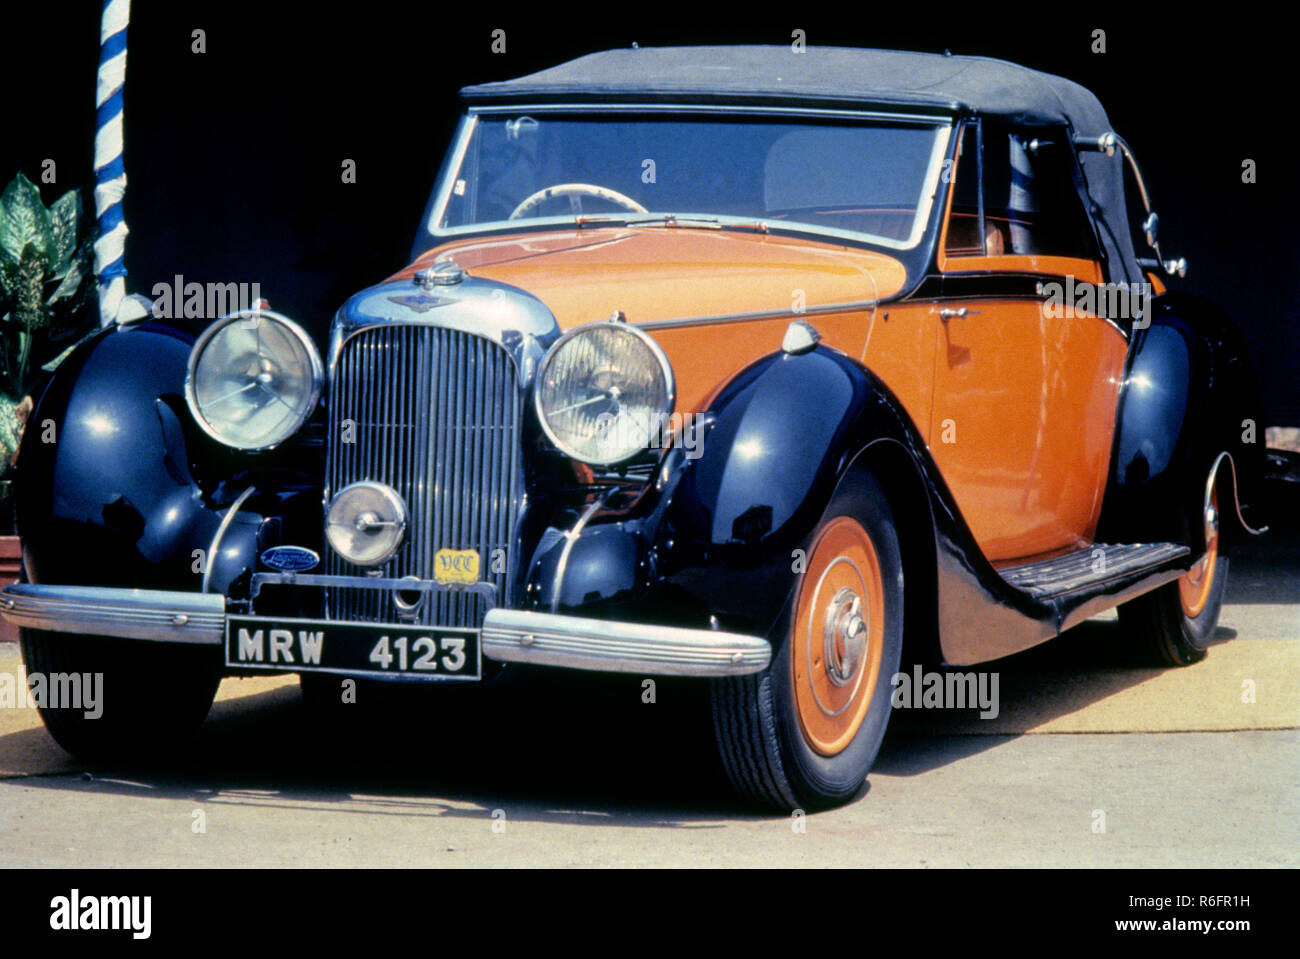 Cars Vehicles Automobiles, Vintage Car Stock Photo